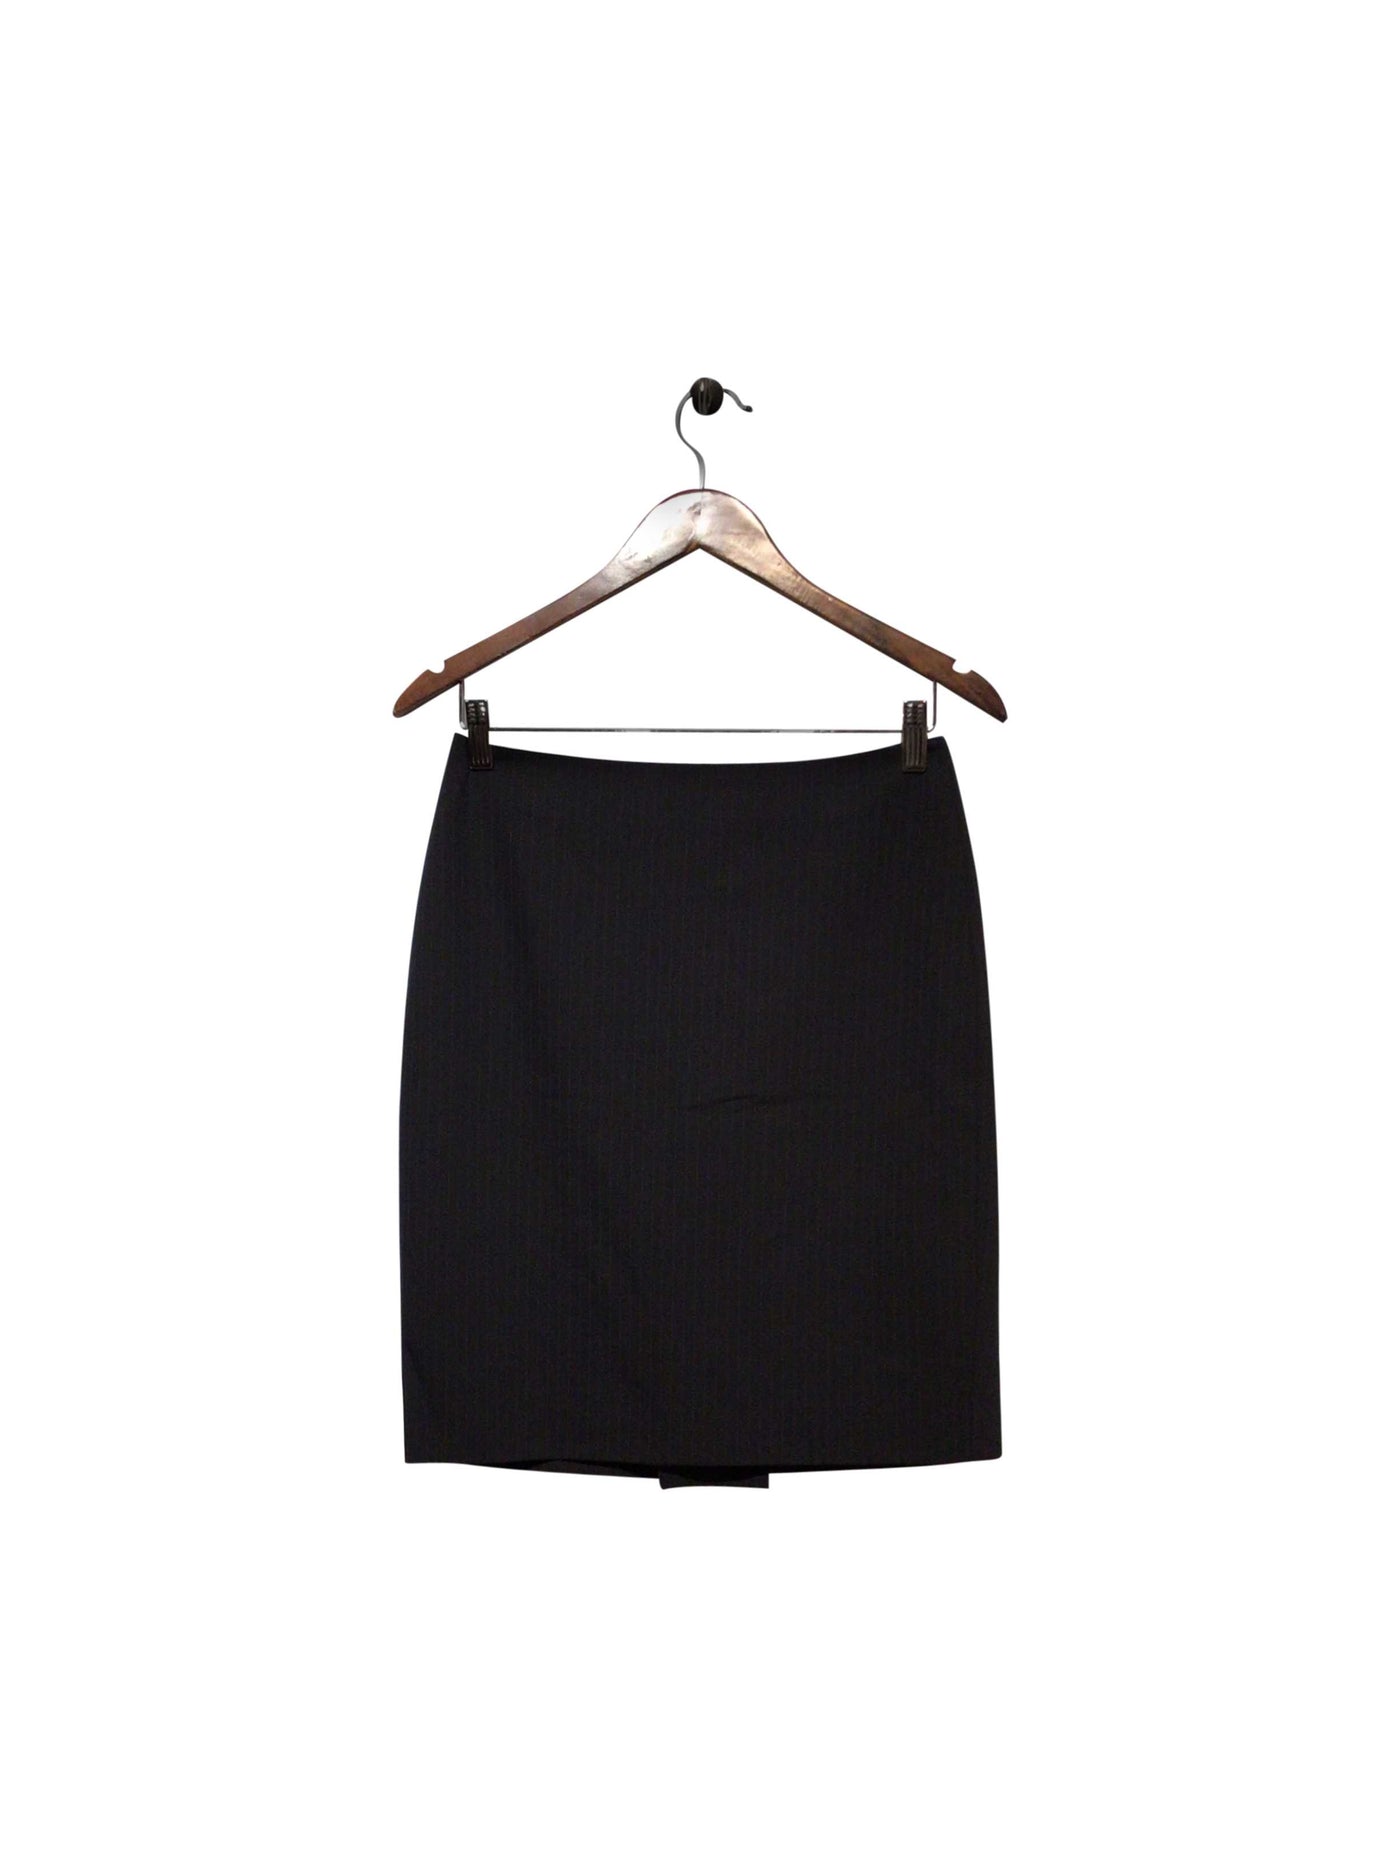 ANN TAYLOR Regular fit Skirt in Black  -  4  34.99 Koop